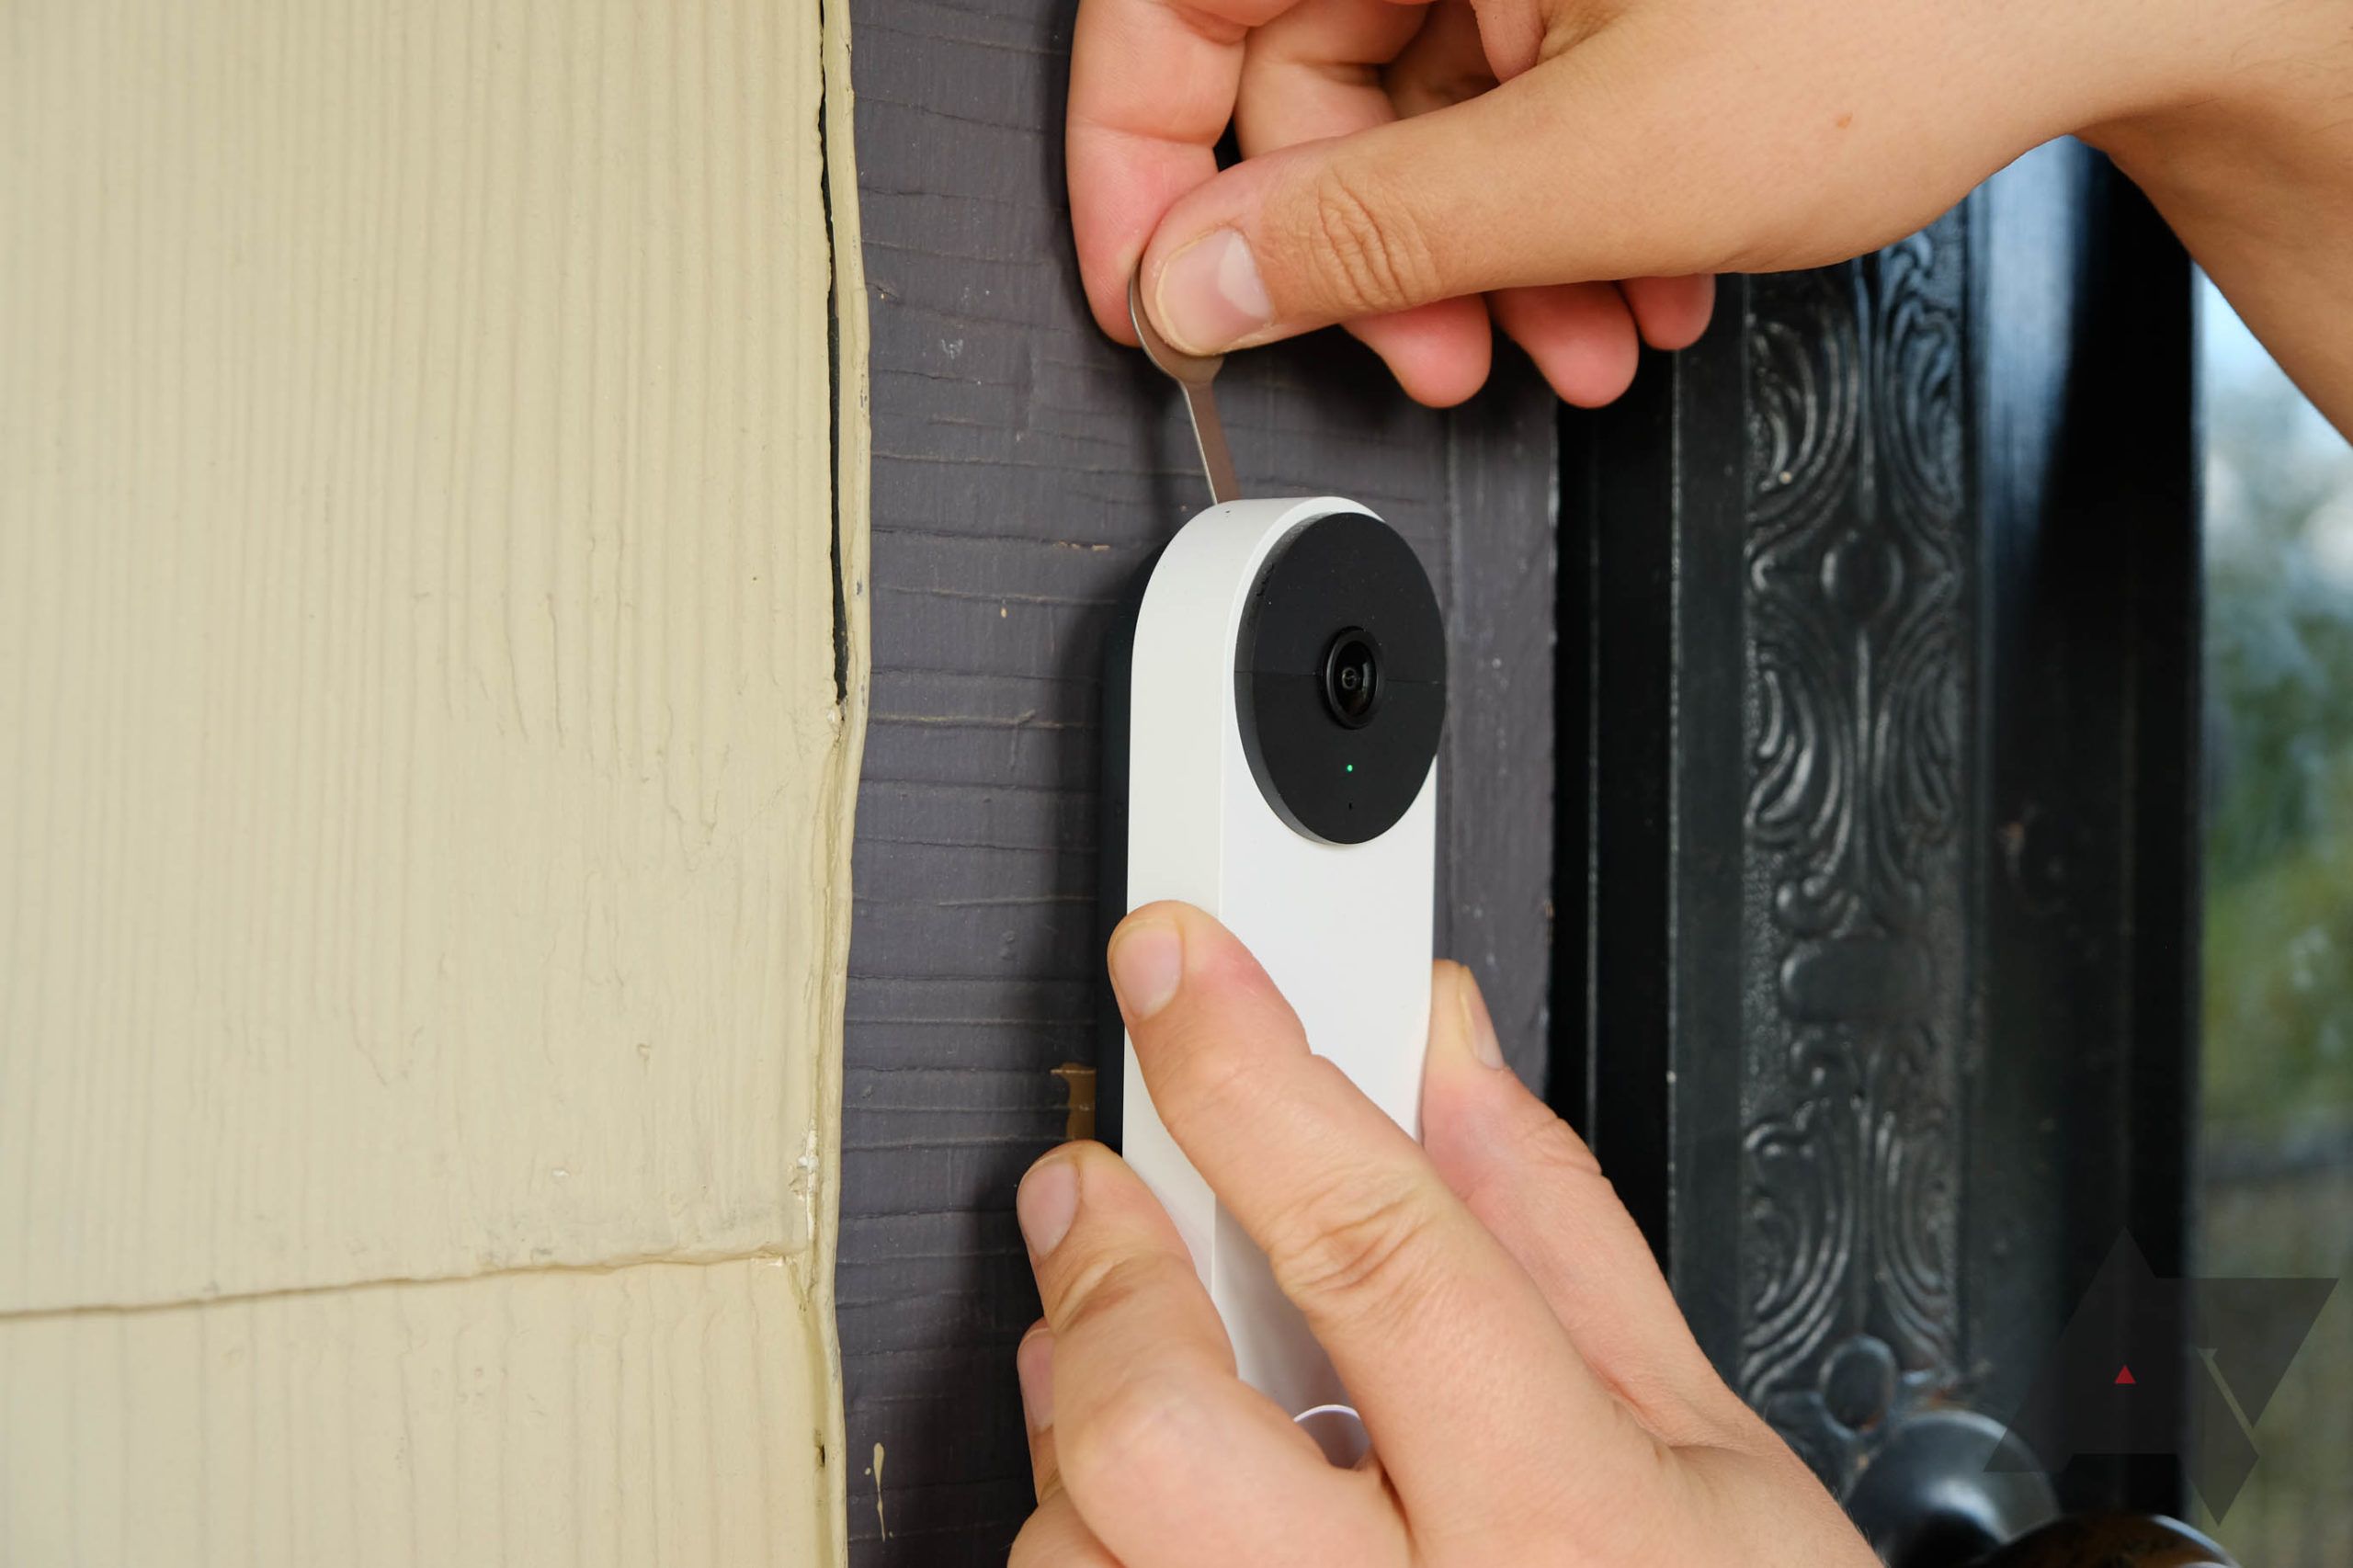 A Nest Video Doorbell being installed.